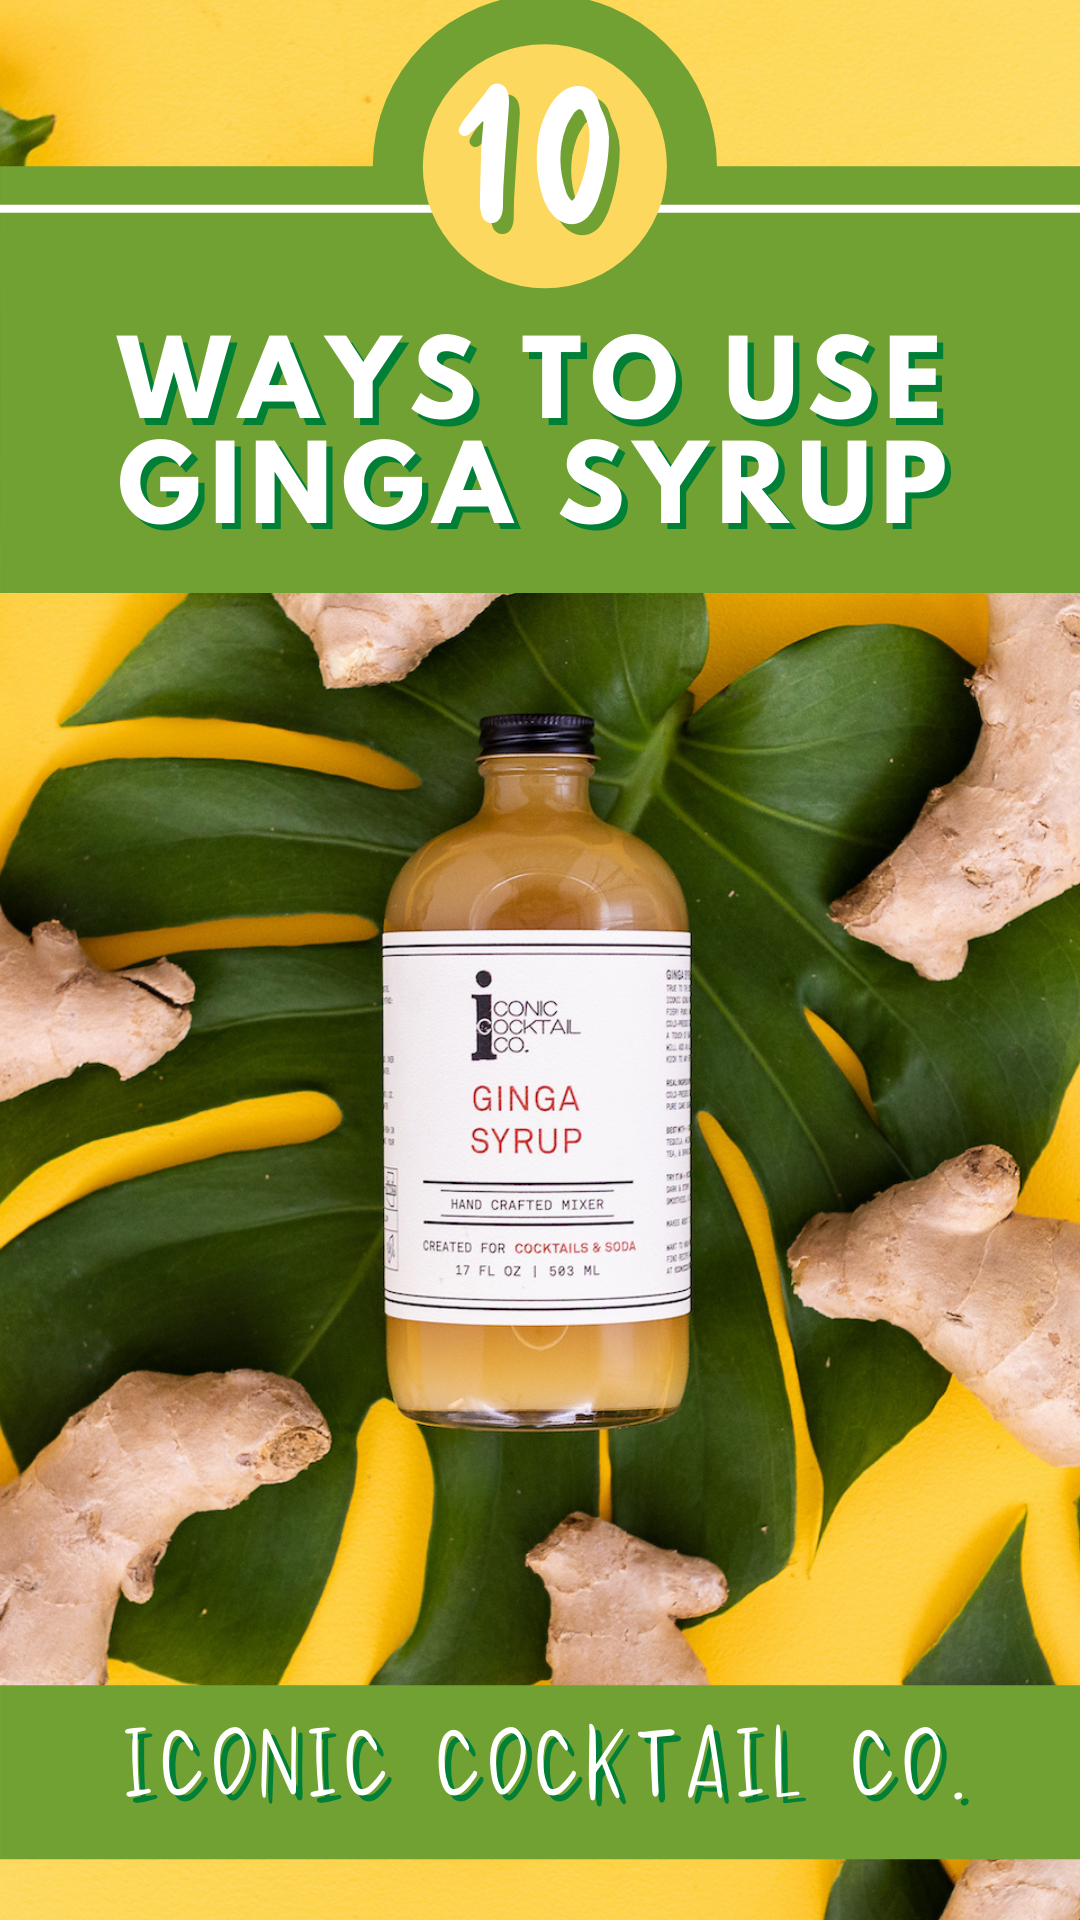 Ten Ways to Use Iconic Ginga Syrup